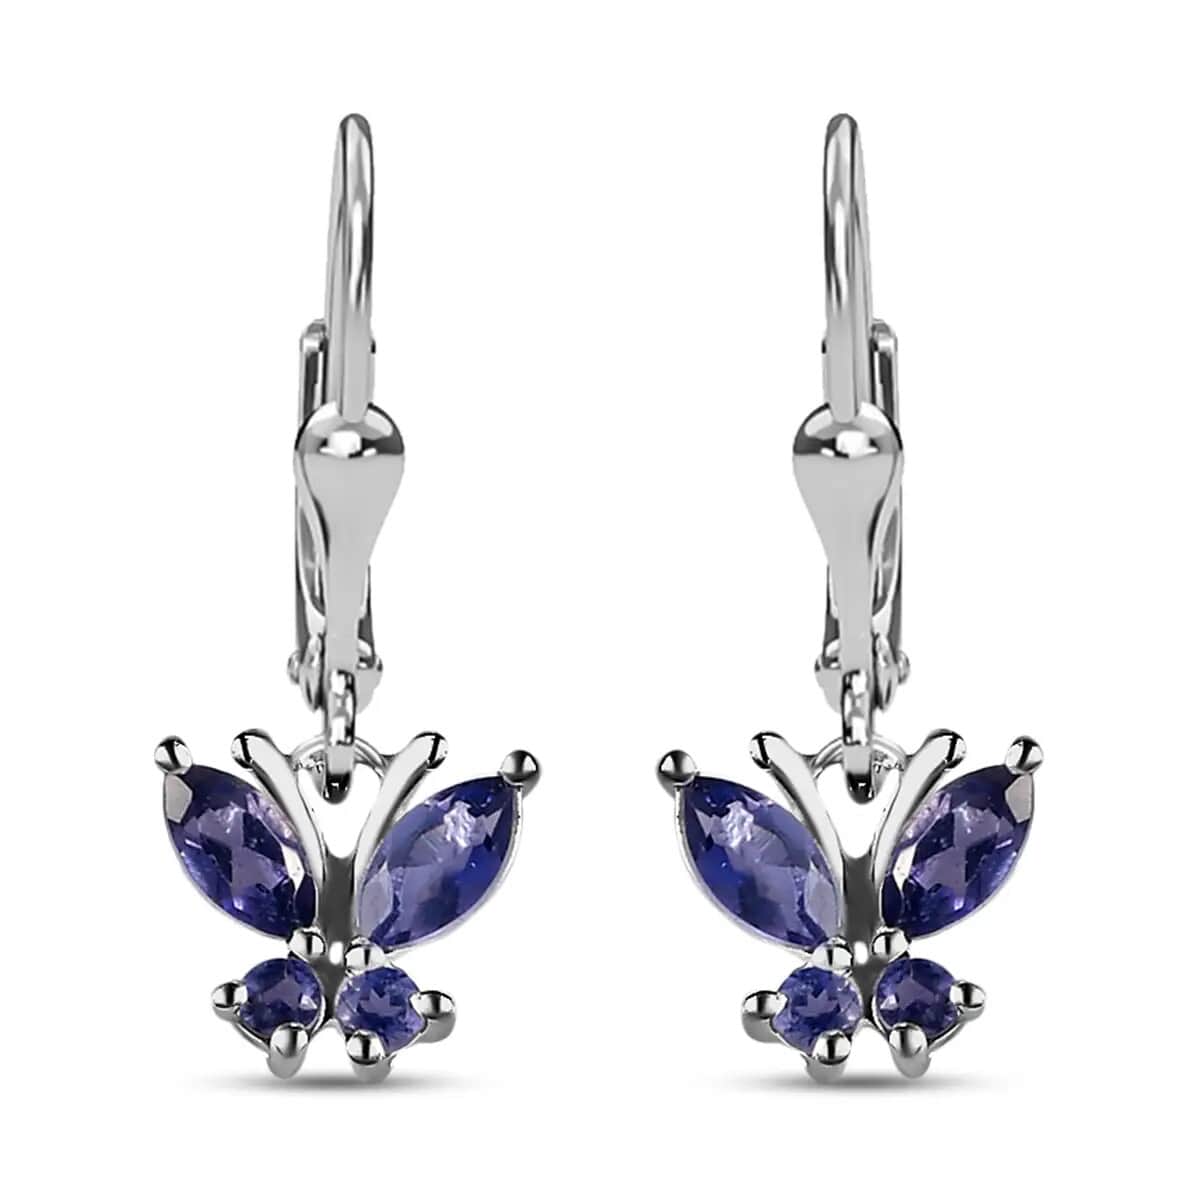 Catalina Iolite Earrings | Butterfly Earrings| Stainless Steel & Sterling Silver Earrings| Iolite Butterfly Earrings 0.75 ctw image number 0